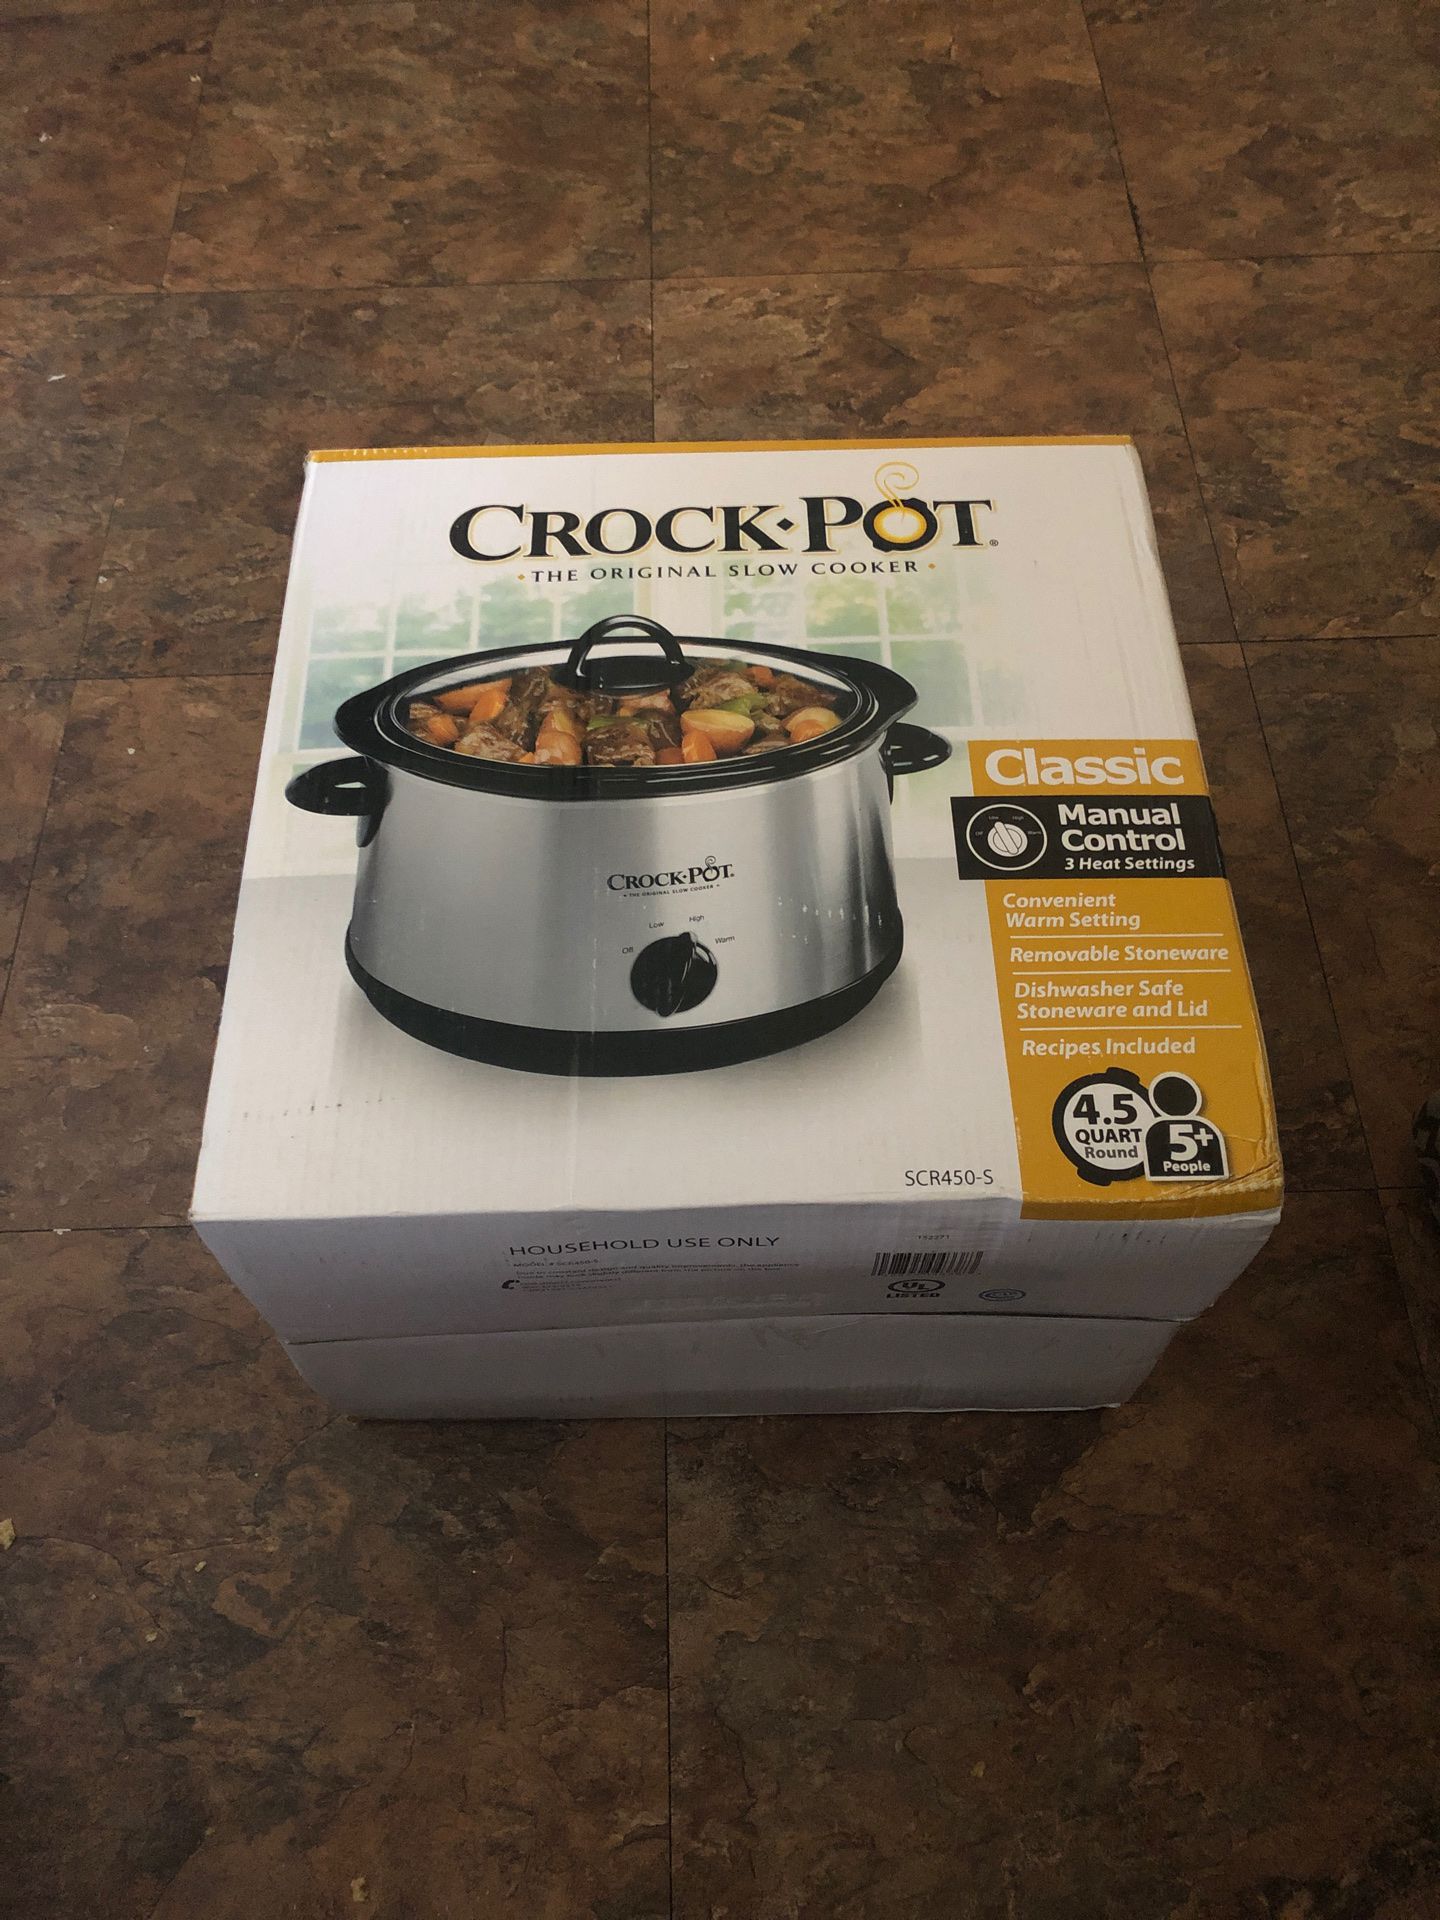 Crockpot the original slow cooker